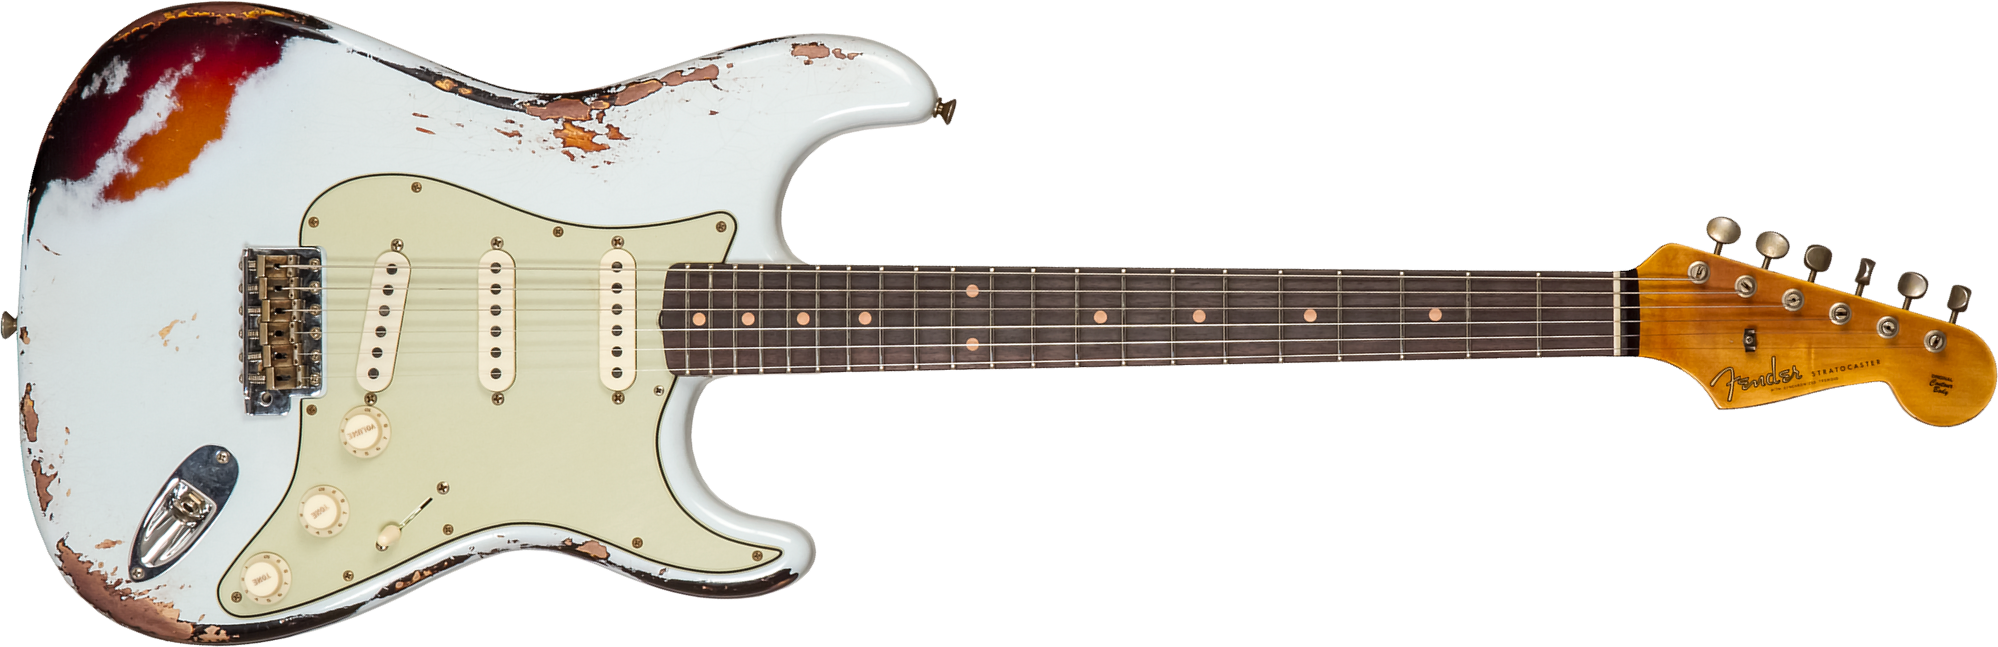 Fender Custom Shop Strat 1961 3s Trem Rw #cz573714 - Heavy Relic Aged Sonic Blue O. 3-color Sunburst - Elektrische gitaar in Str-vorm - Main picture